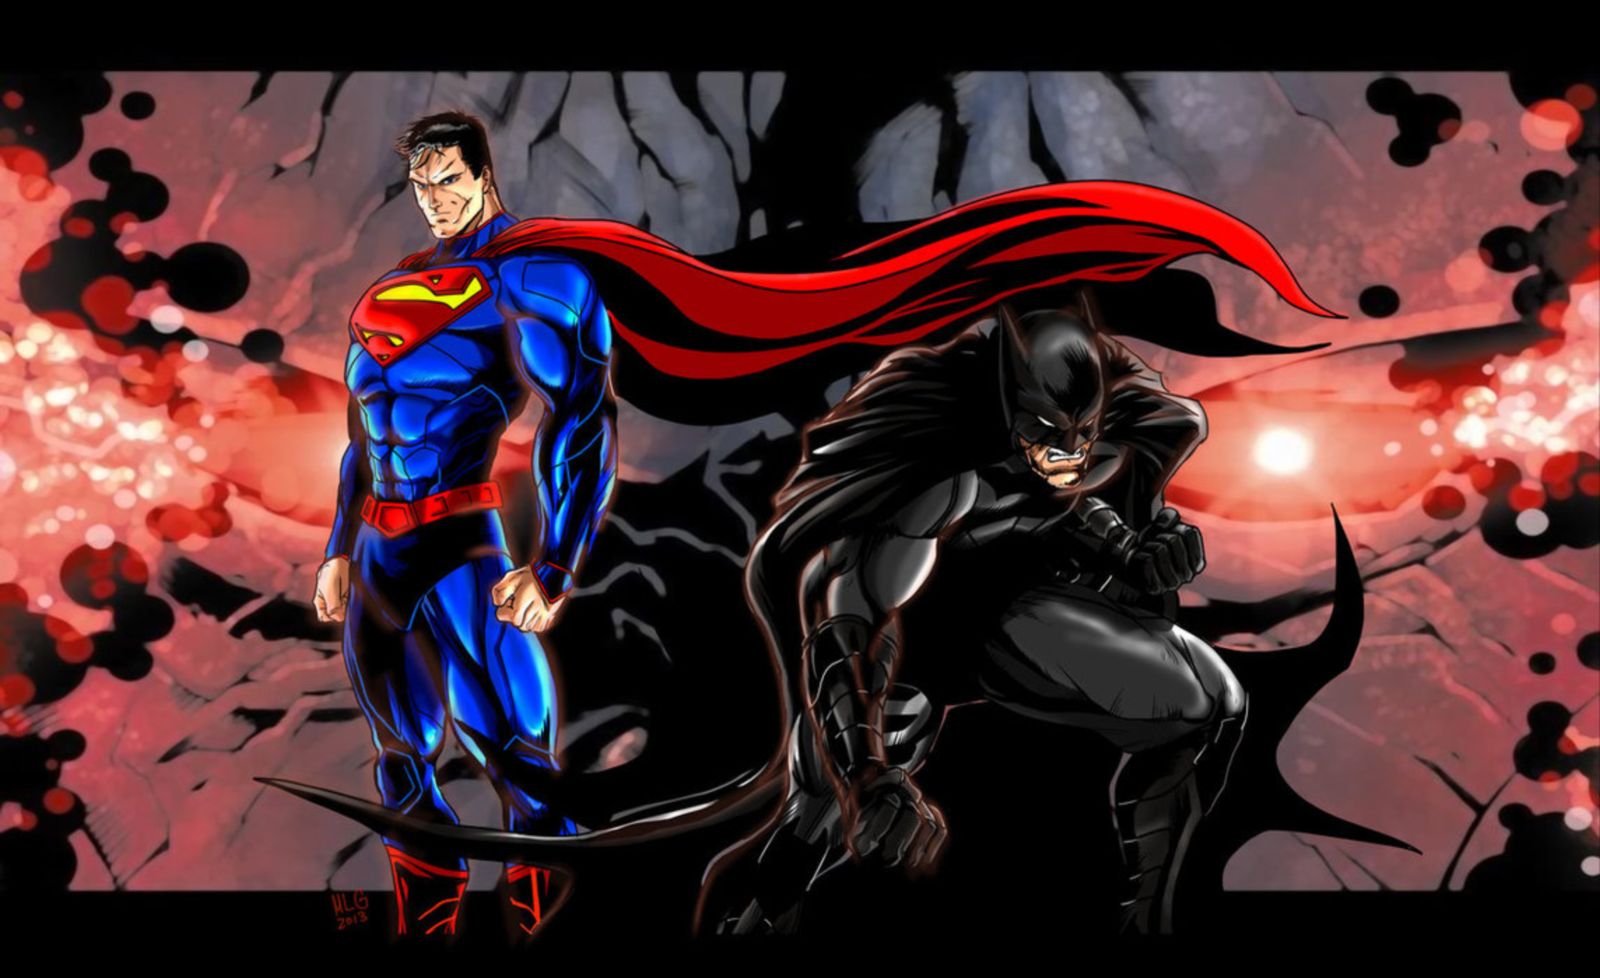 Batman vs Superman HD Wallpaper for Desktop - Oki Pix